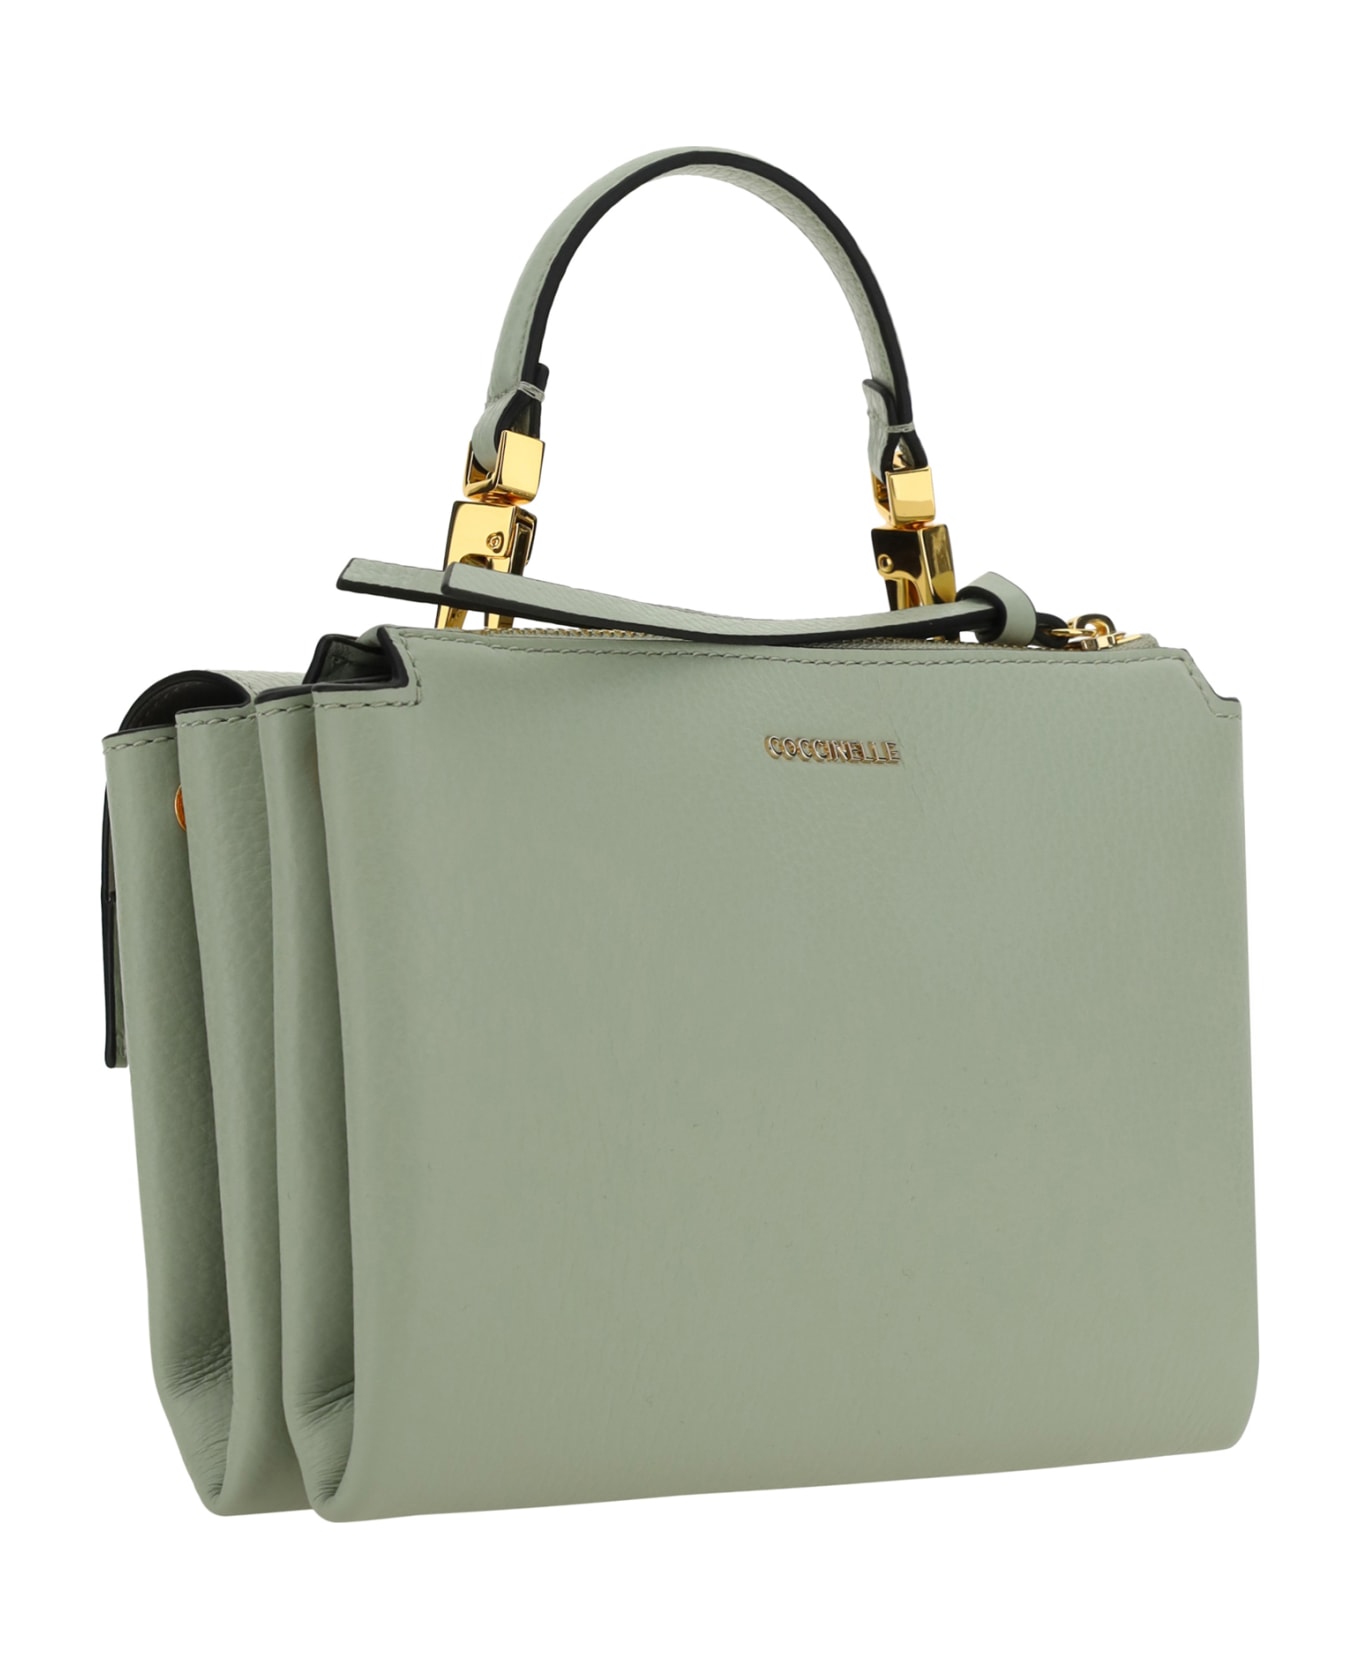 Coccinelle Arlettis Handbag - Celadon Green トートバッグ